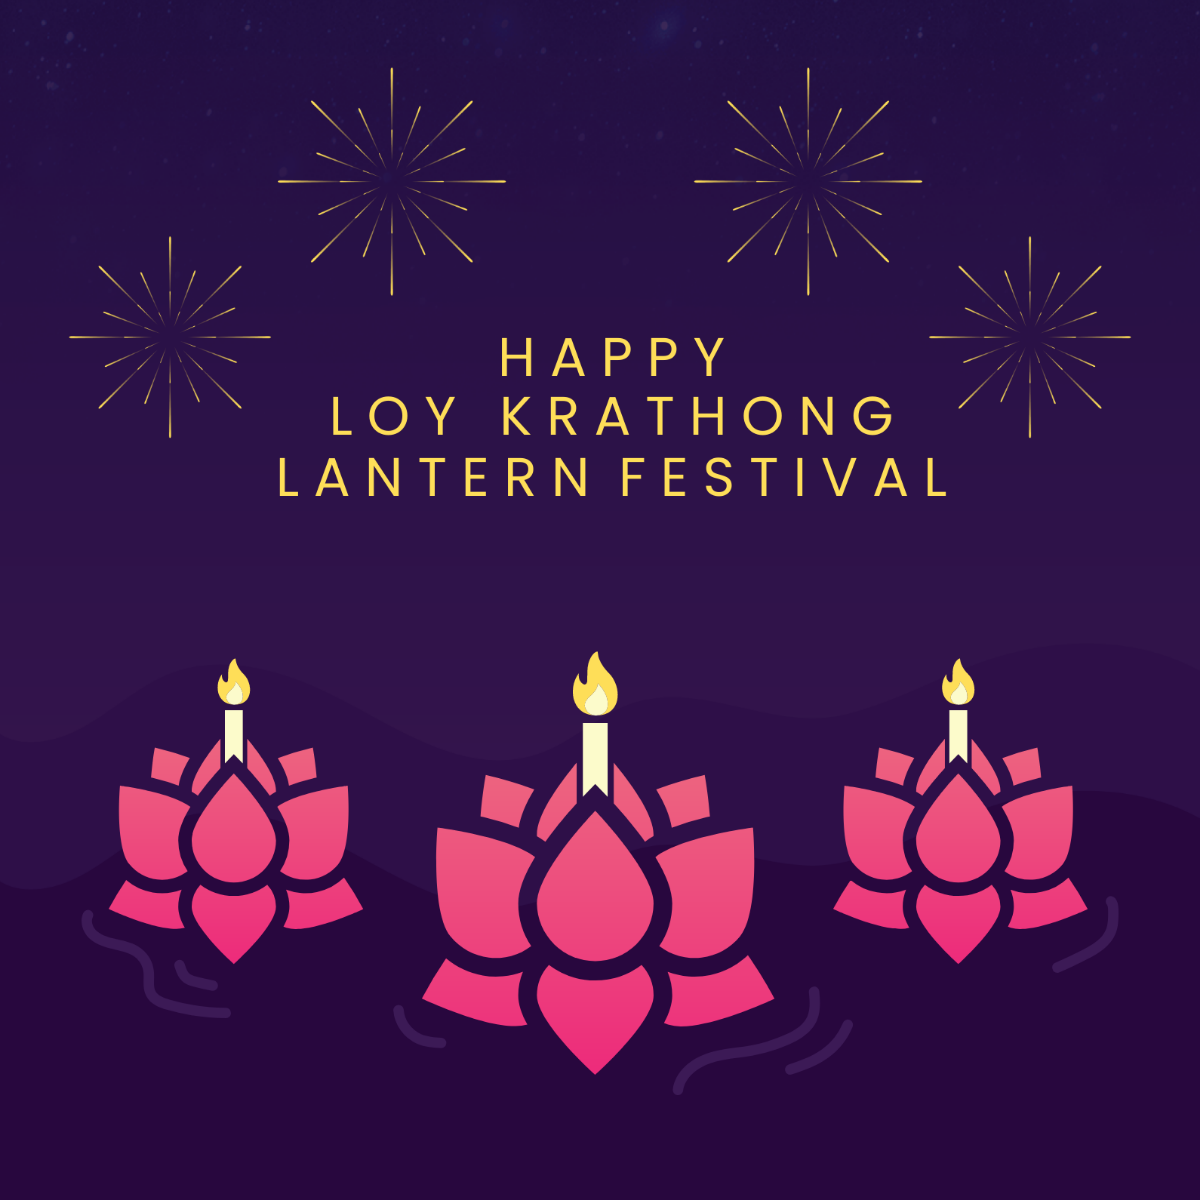 Loy Krathong Lantern Festival LinkedIn Post